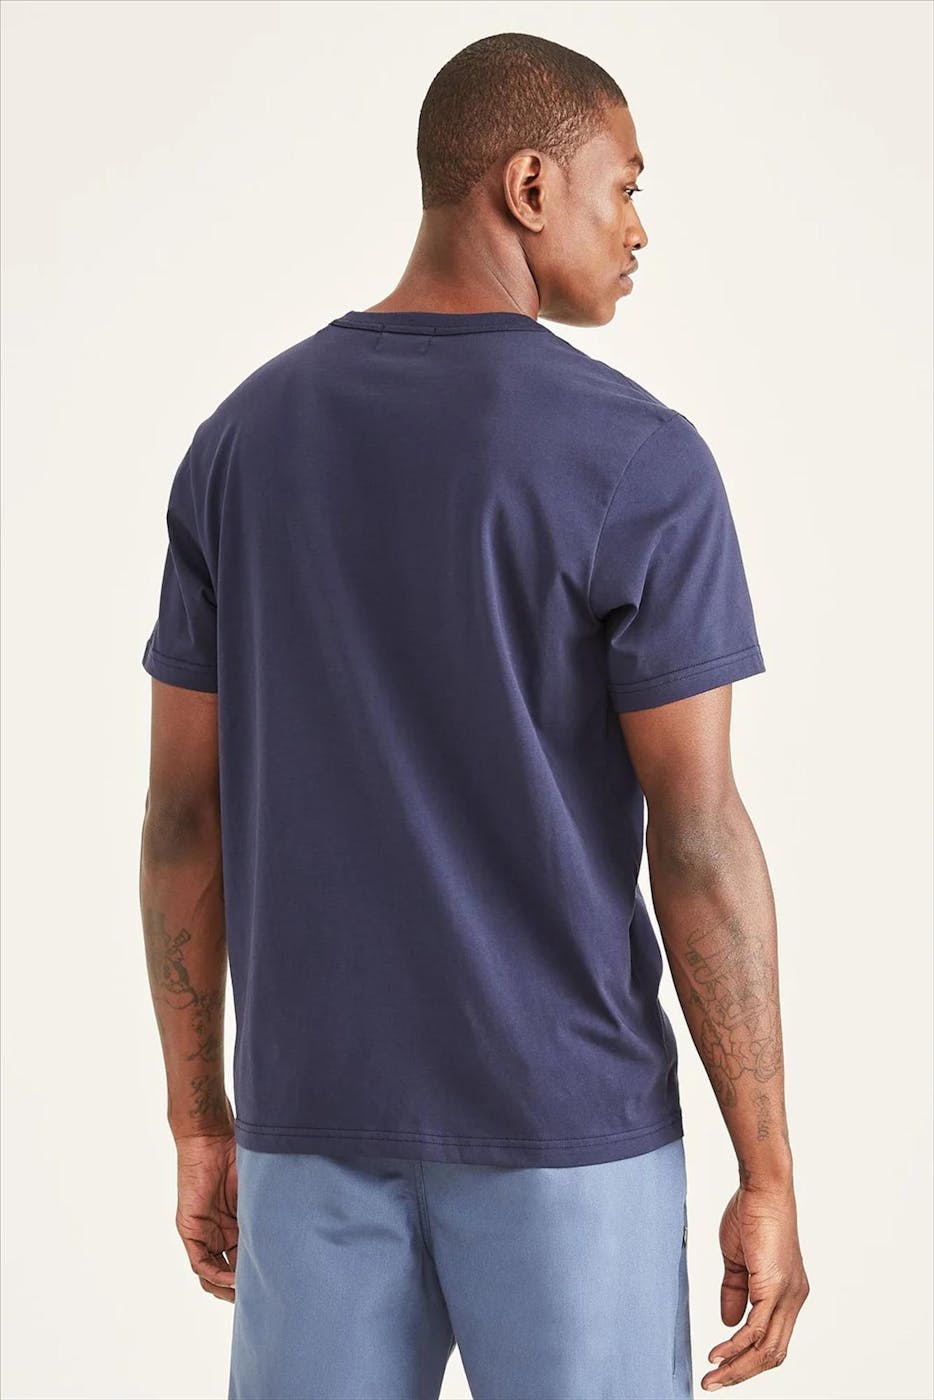 Dockers - Donkerblauwe Icon T-shirt